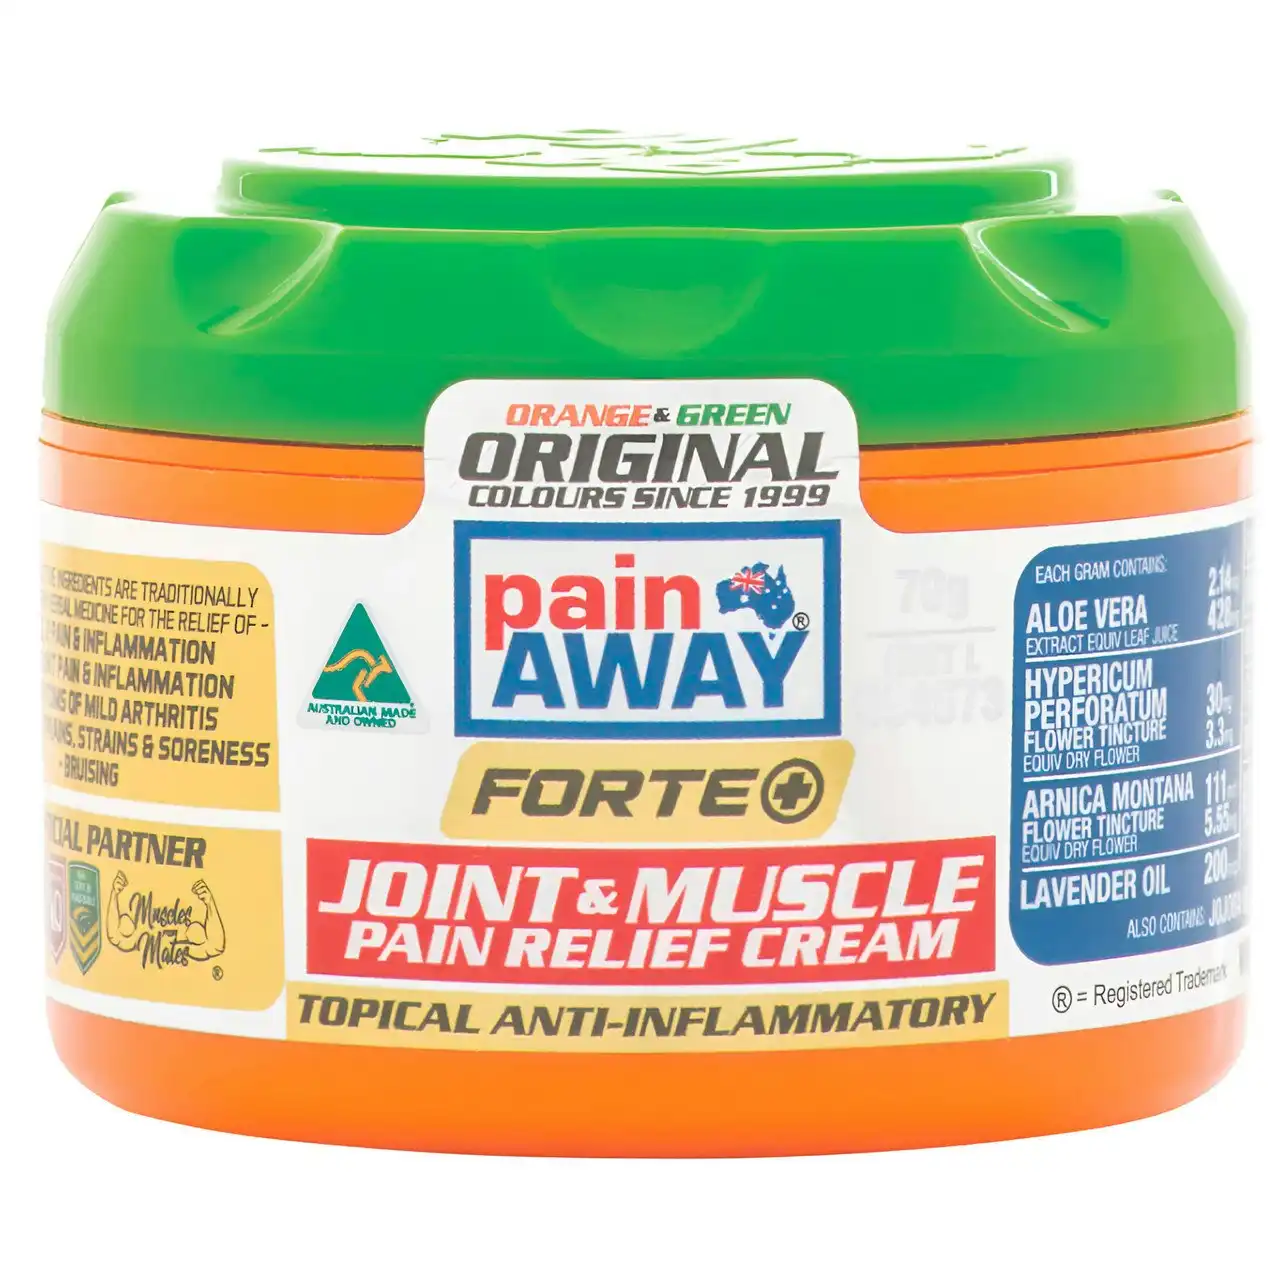 Pain Away Forte+ Original Pain Relief Cream 70g